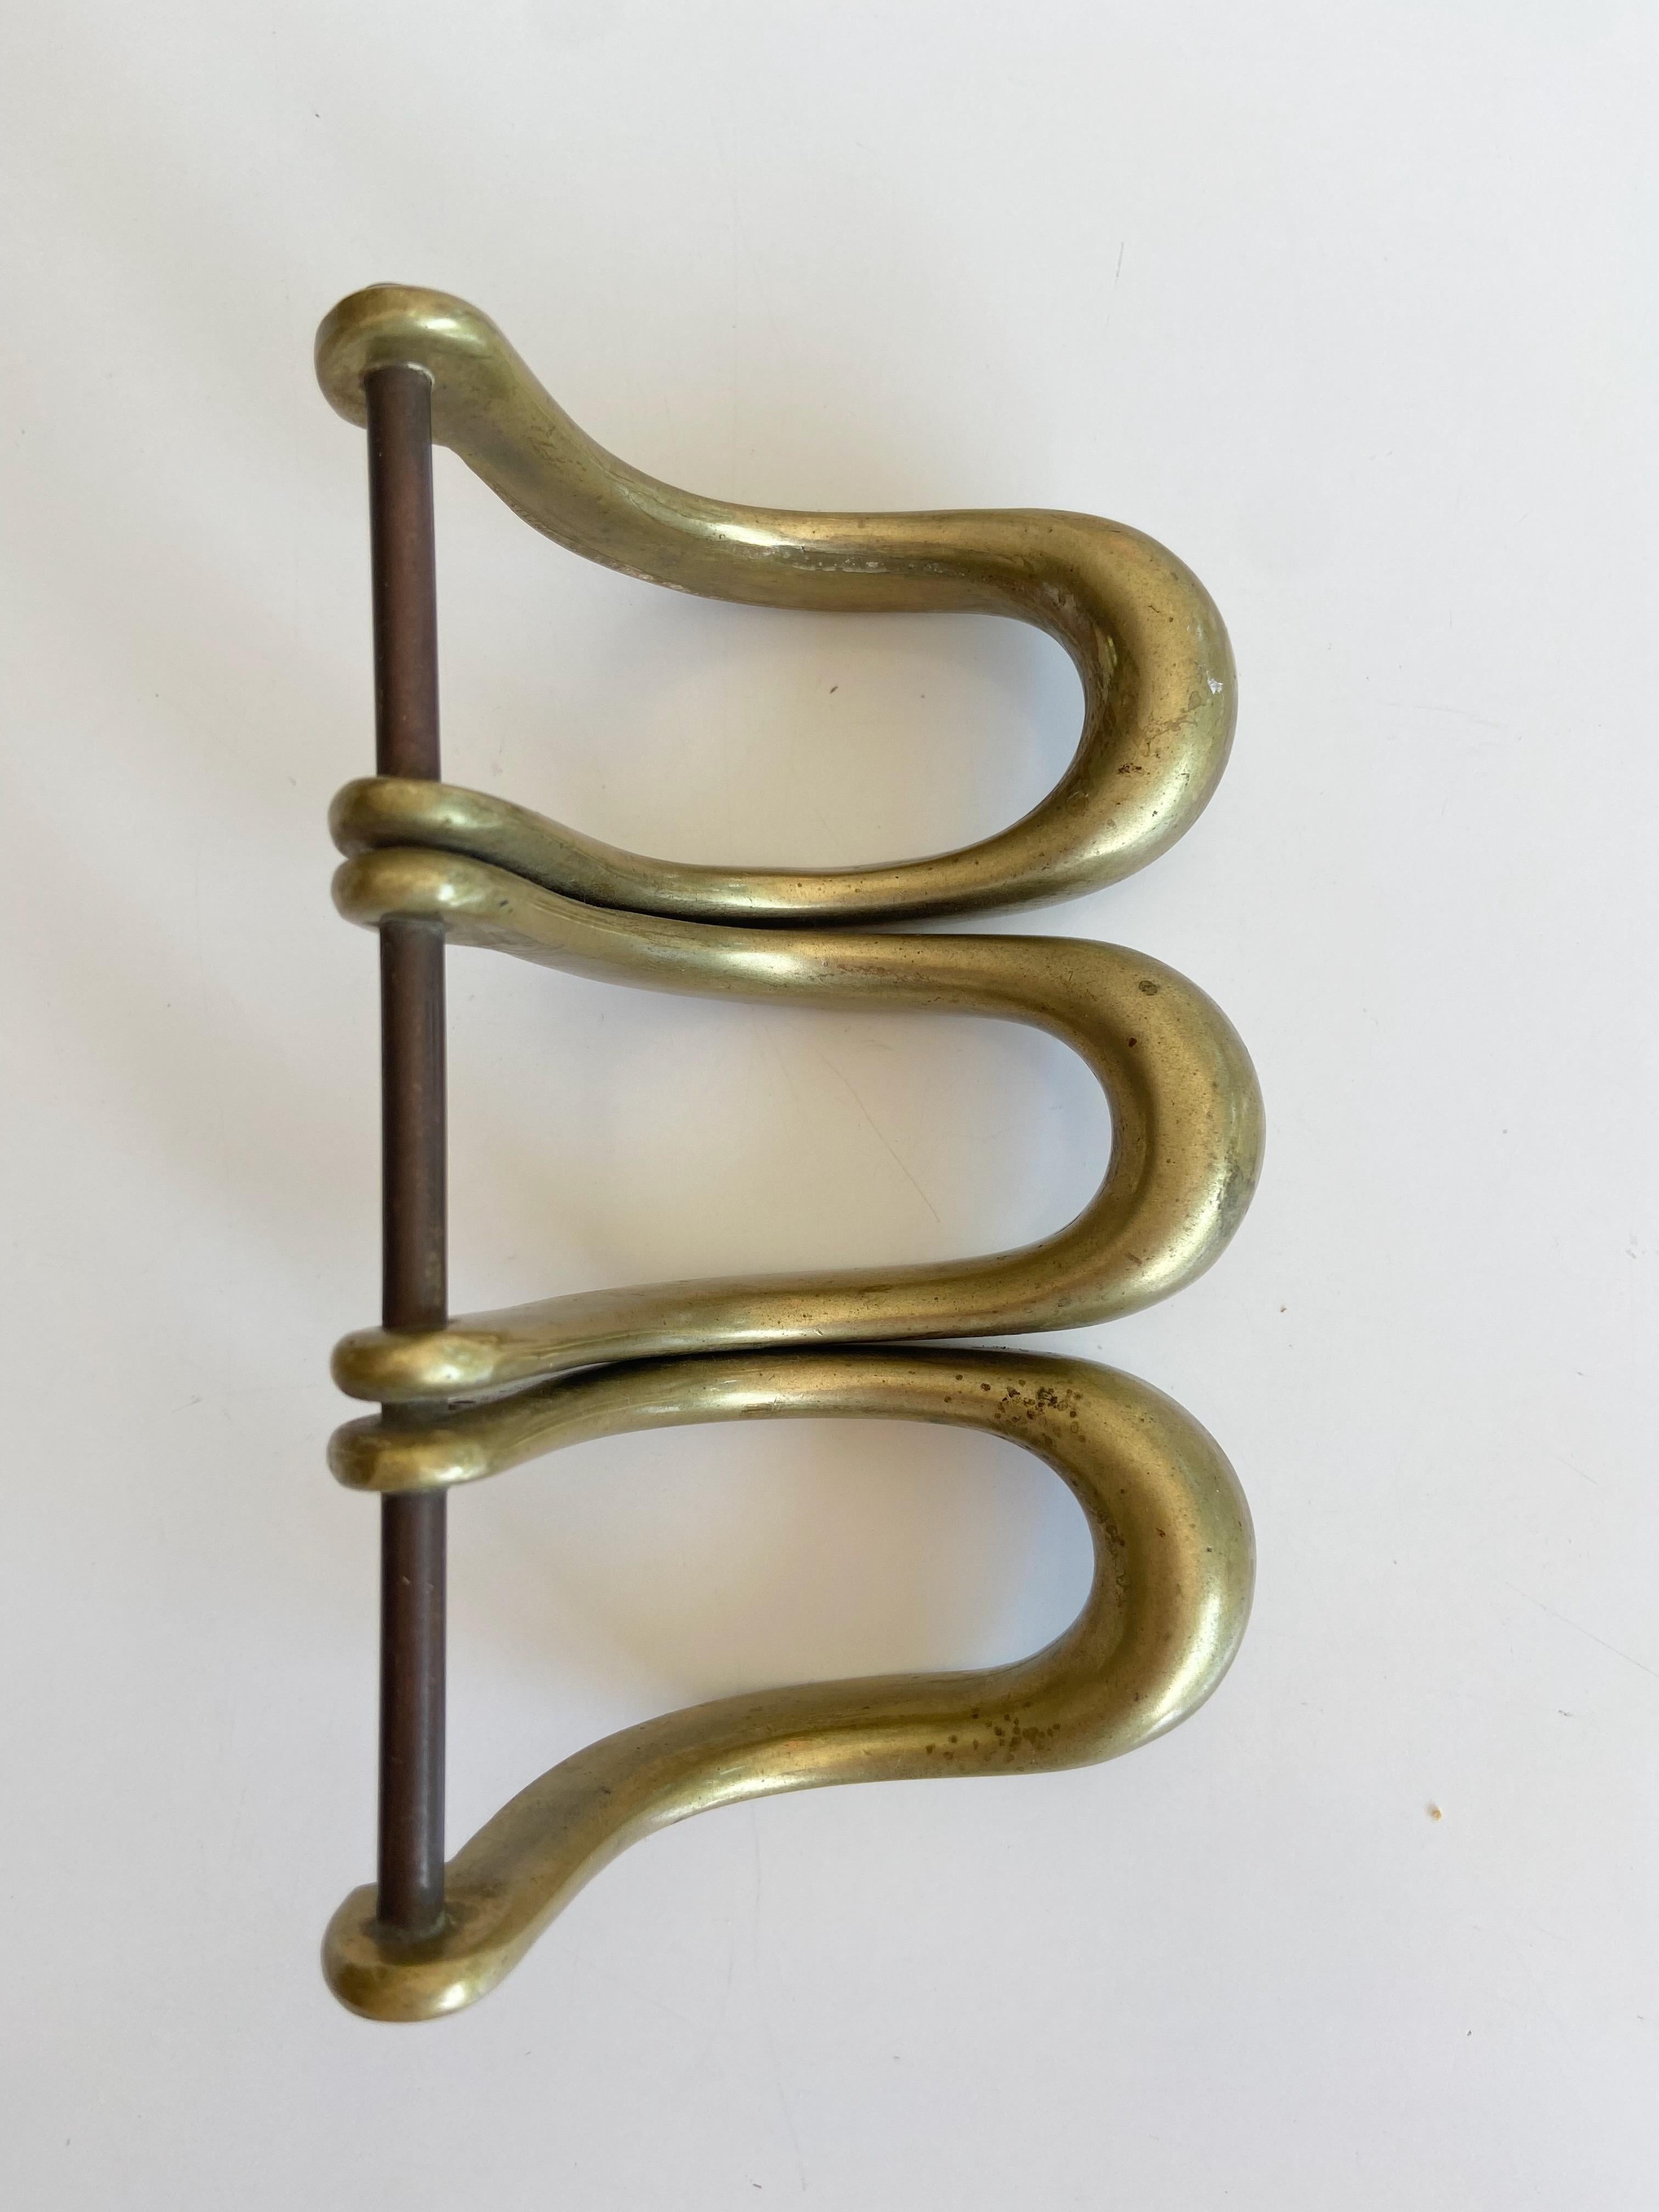 Illums Bolighus brass Design pipe stand Made in Denmark 1